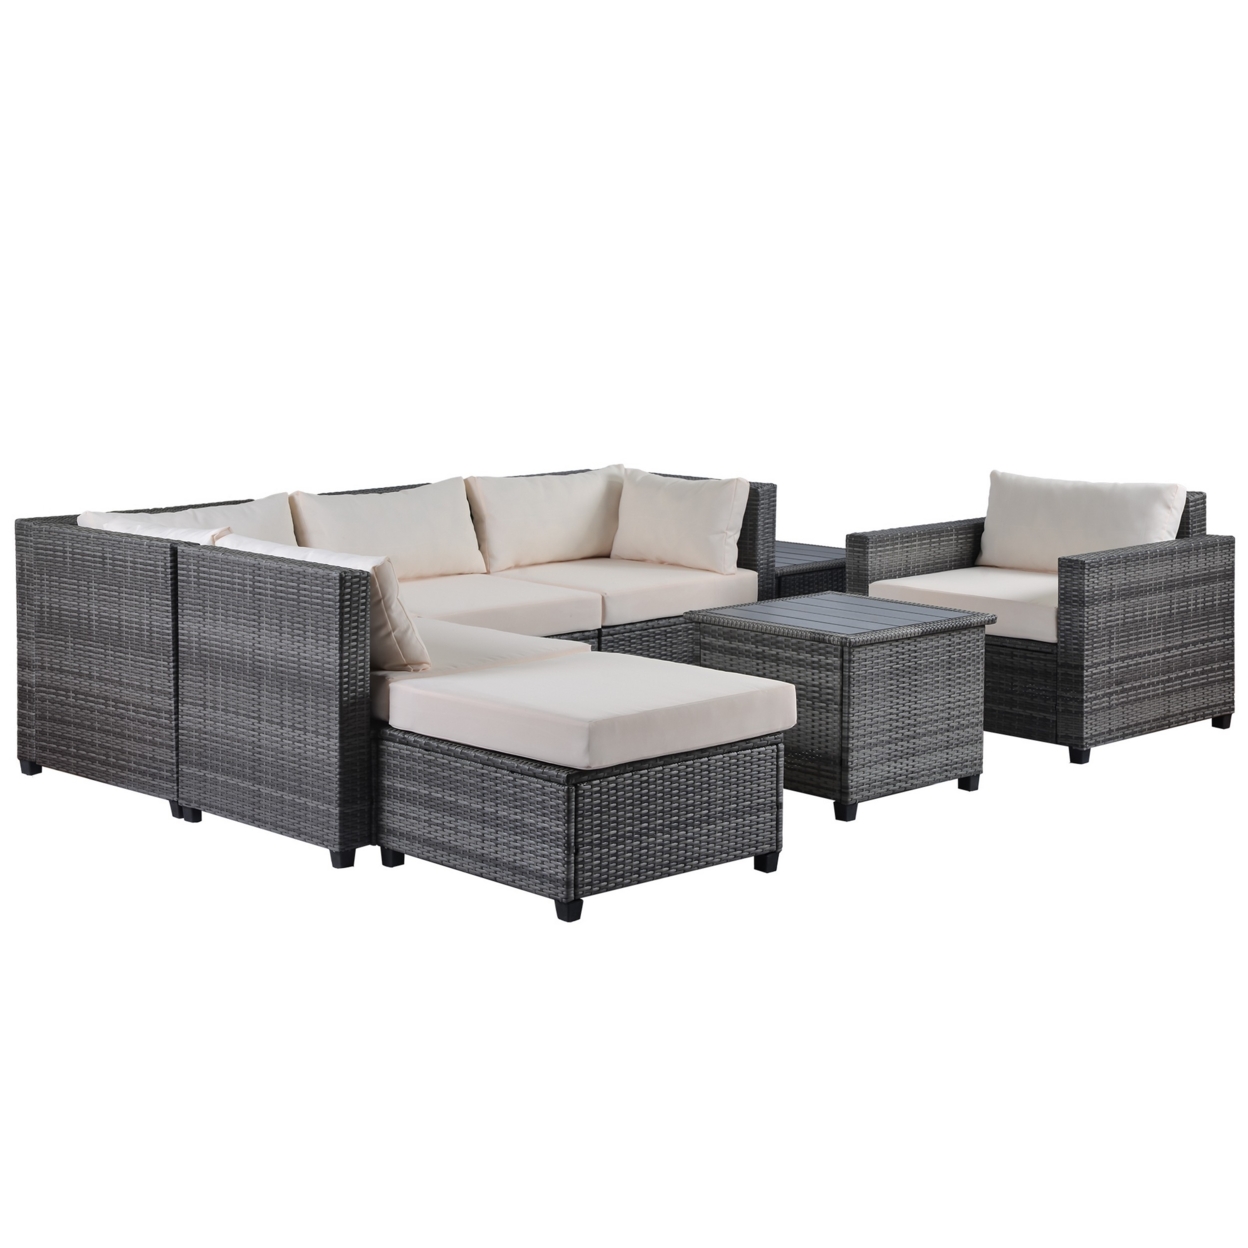 8 Piece Modern Outdoor Sectional Sofa Set, Steel And Rattan Frame, Gray- Saltoro Sherpi